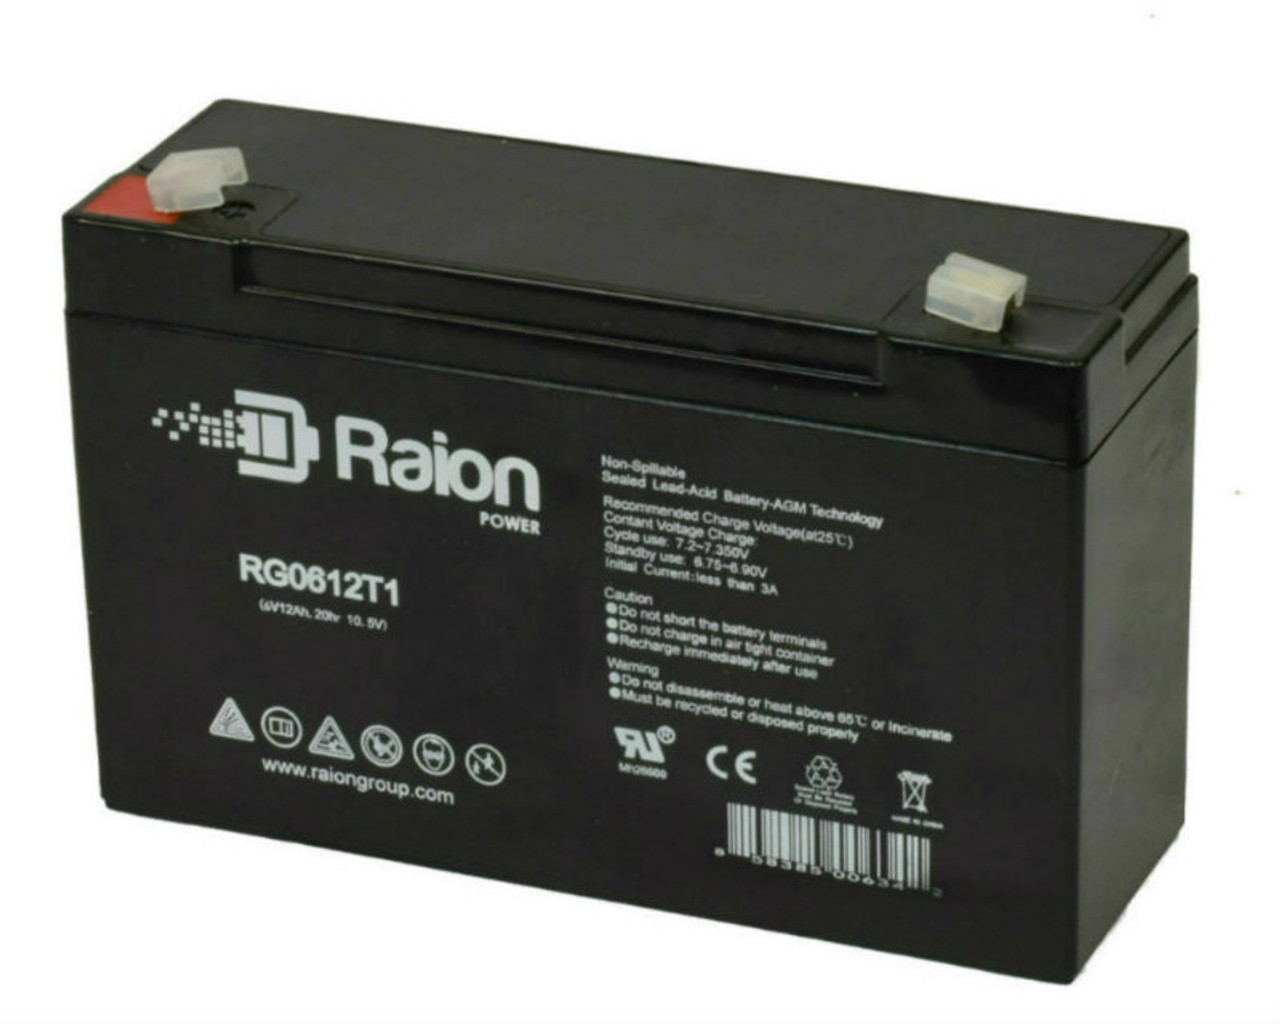 Raion Power RG06120T1 Replacement 6V 12Ah Emergency Light Battery for Elan GC680